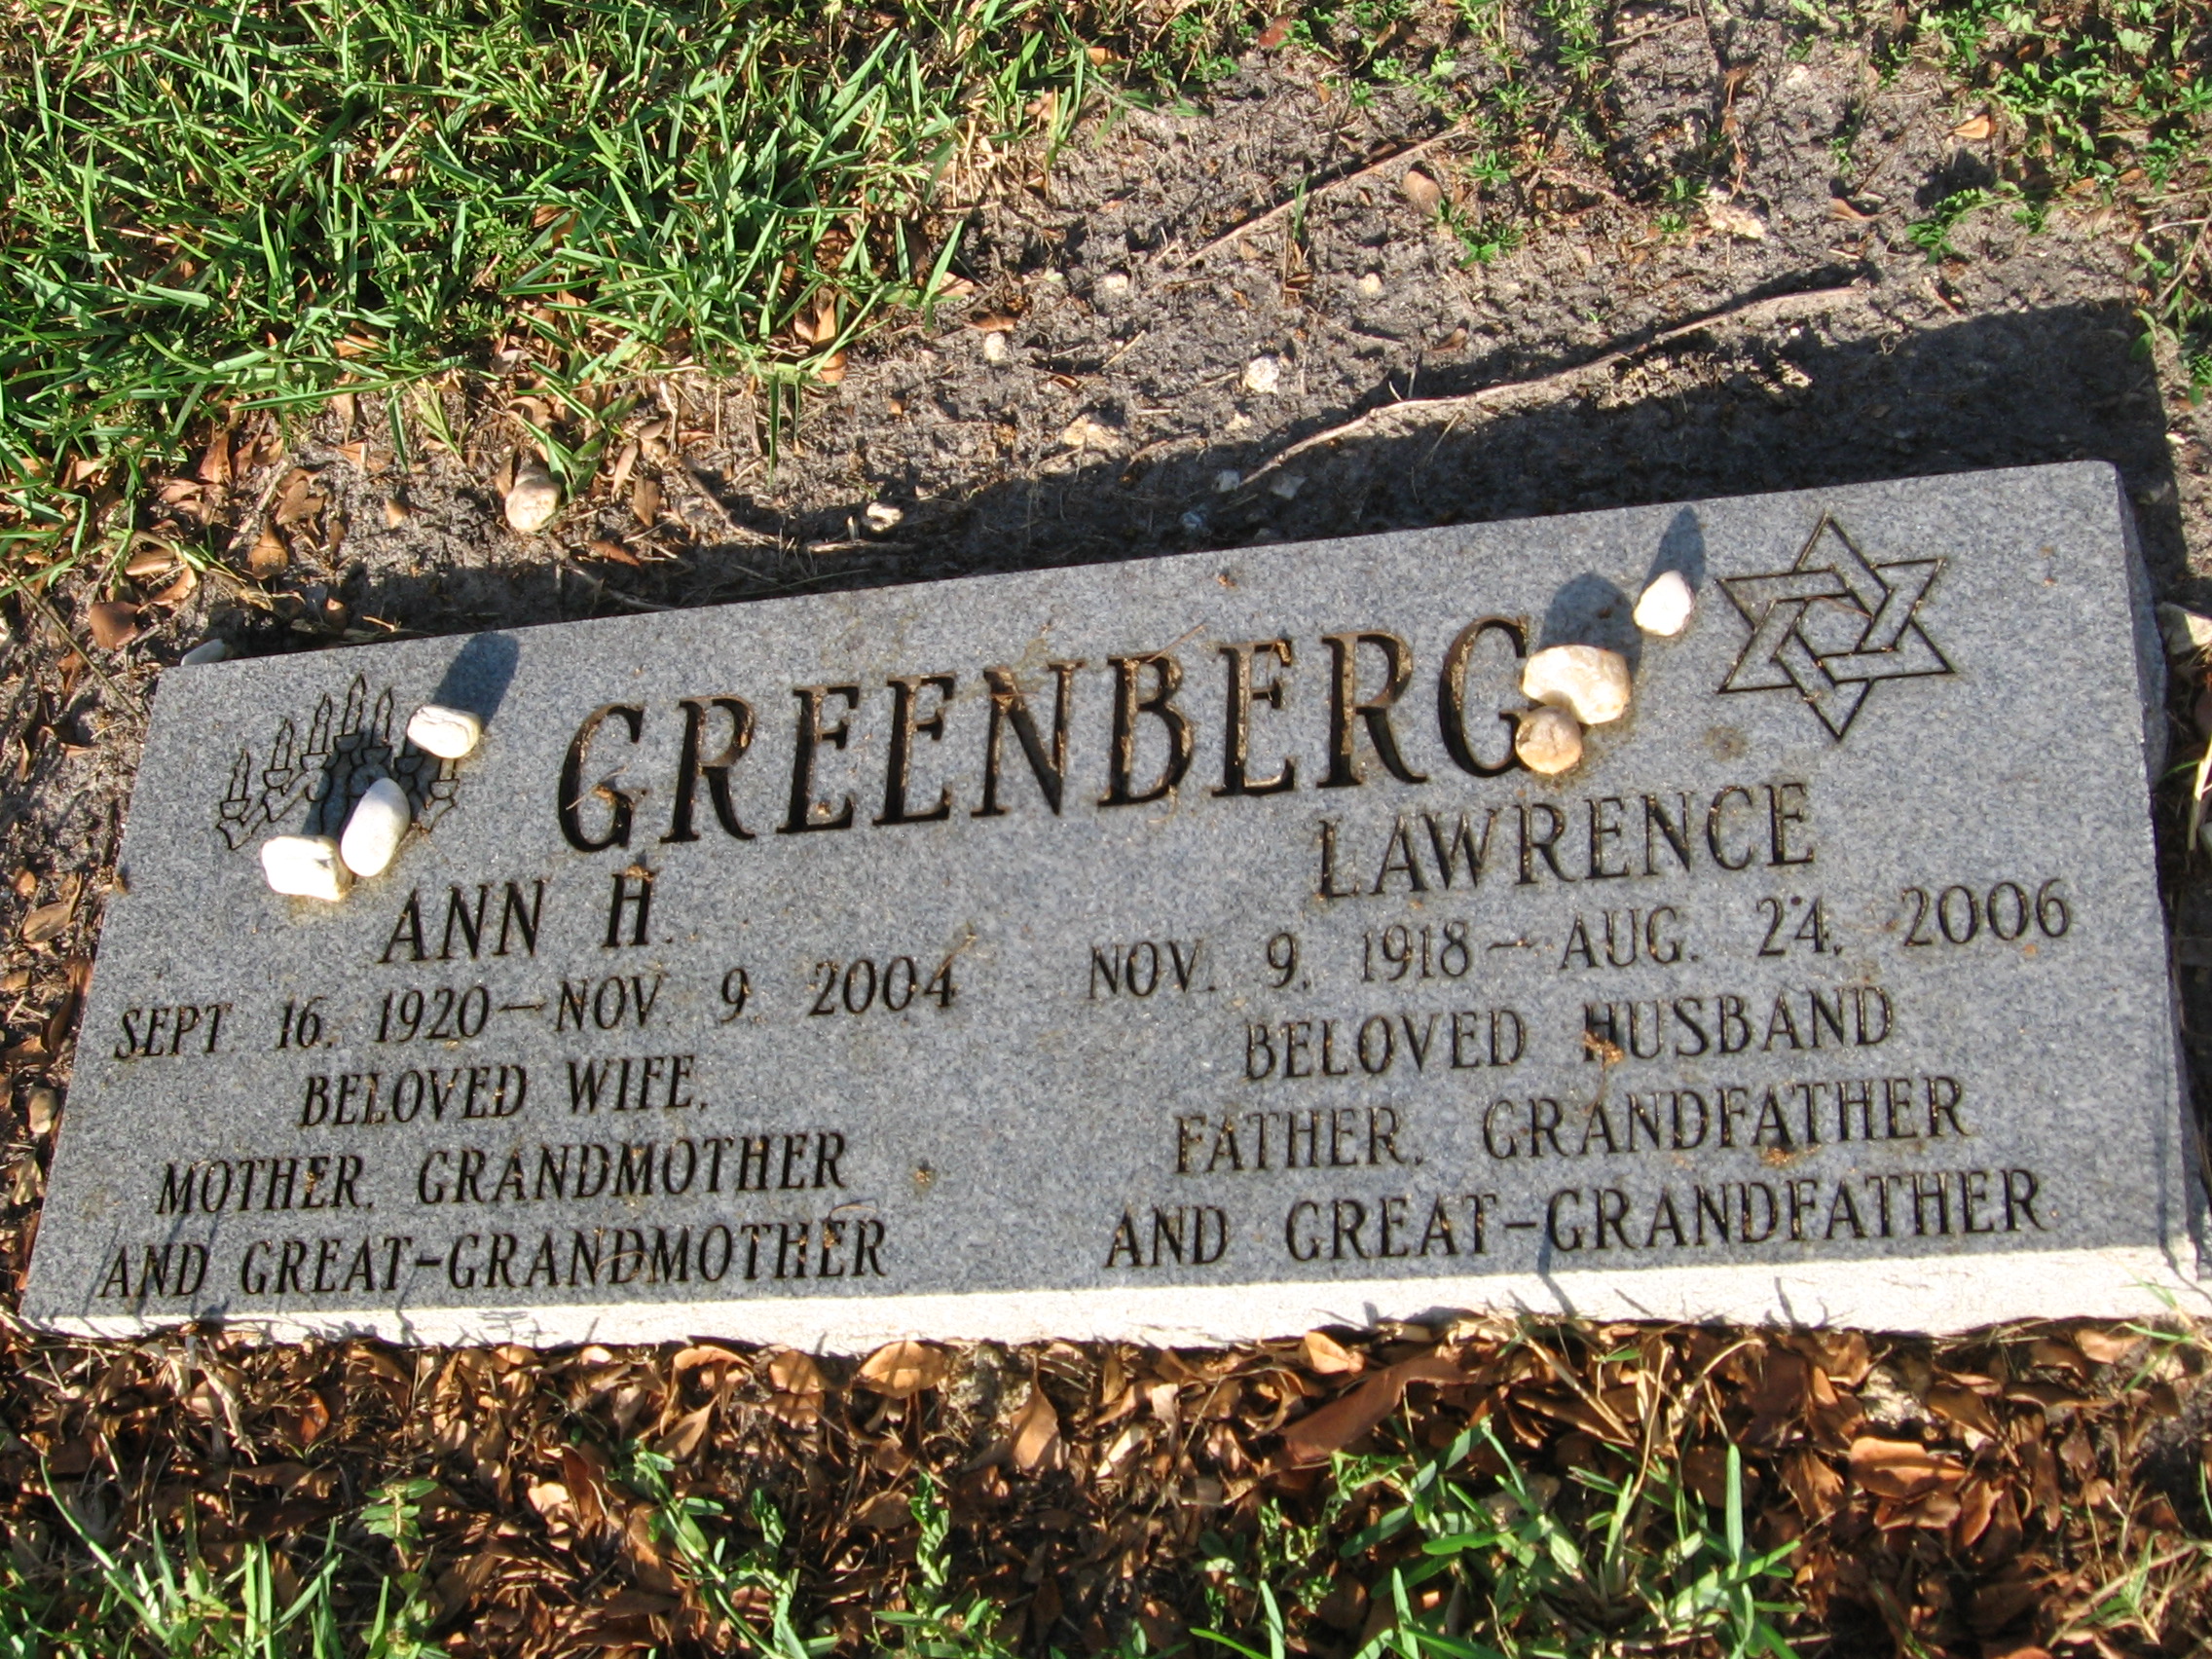 Lawrence Greenberg